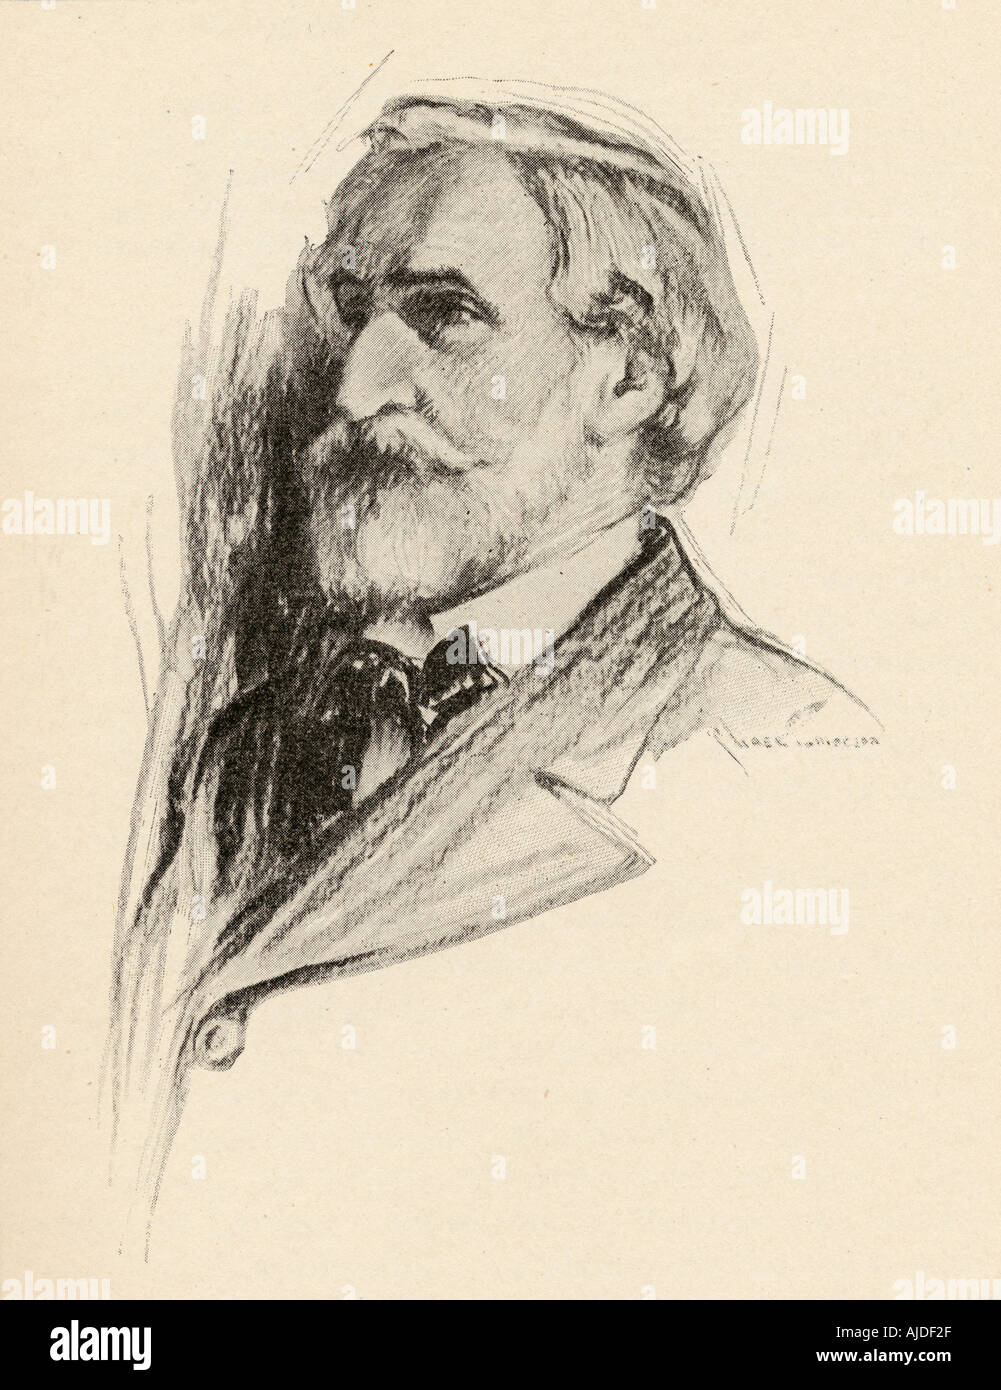 Giuseppe Verdi, 1813 - 1901. Italian composer. Stock Photo